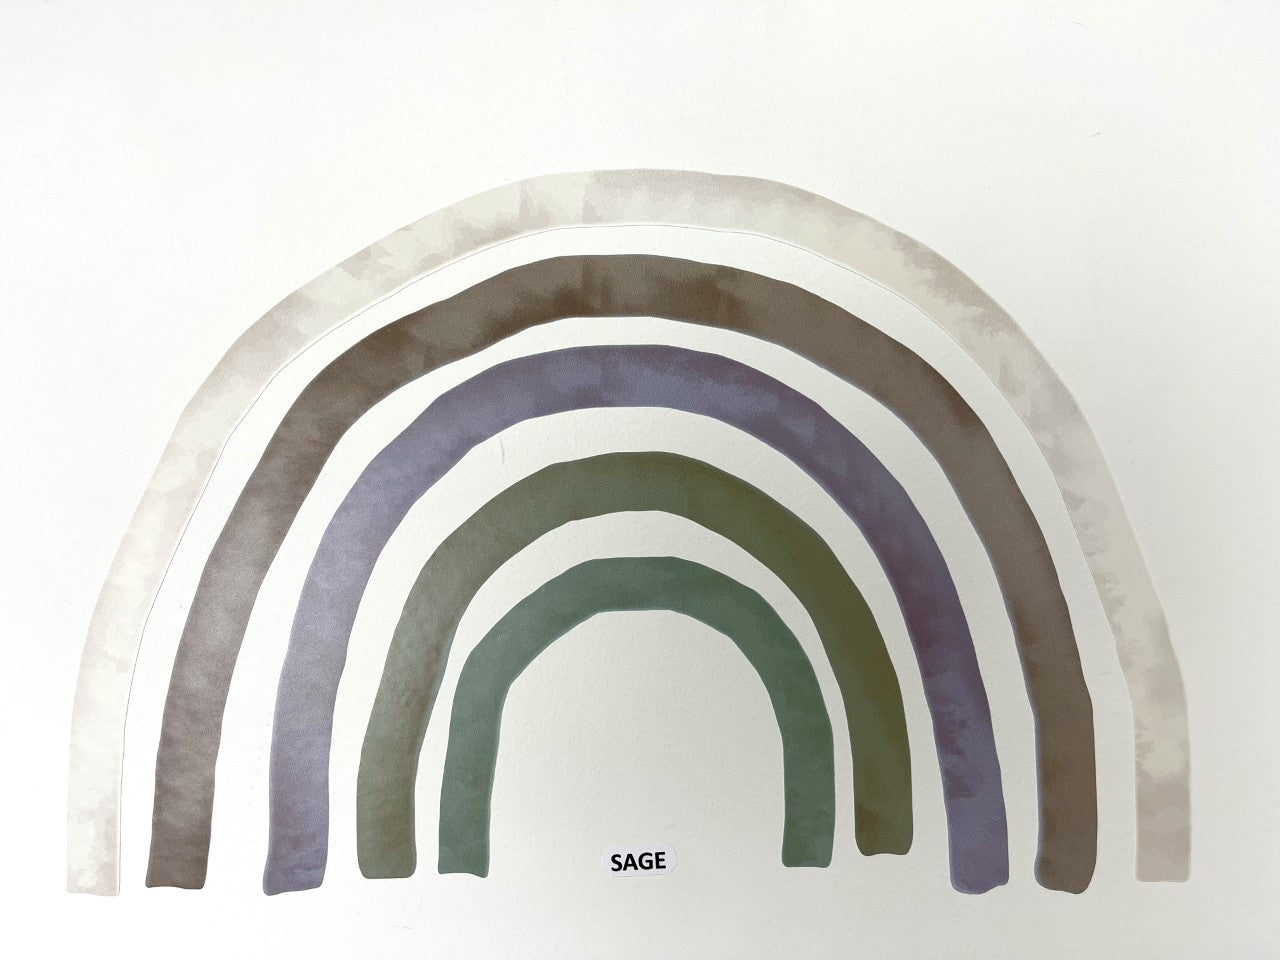 Swatch image of Sage rainbow